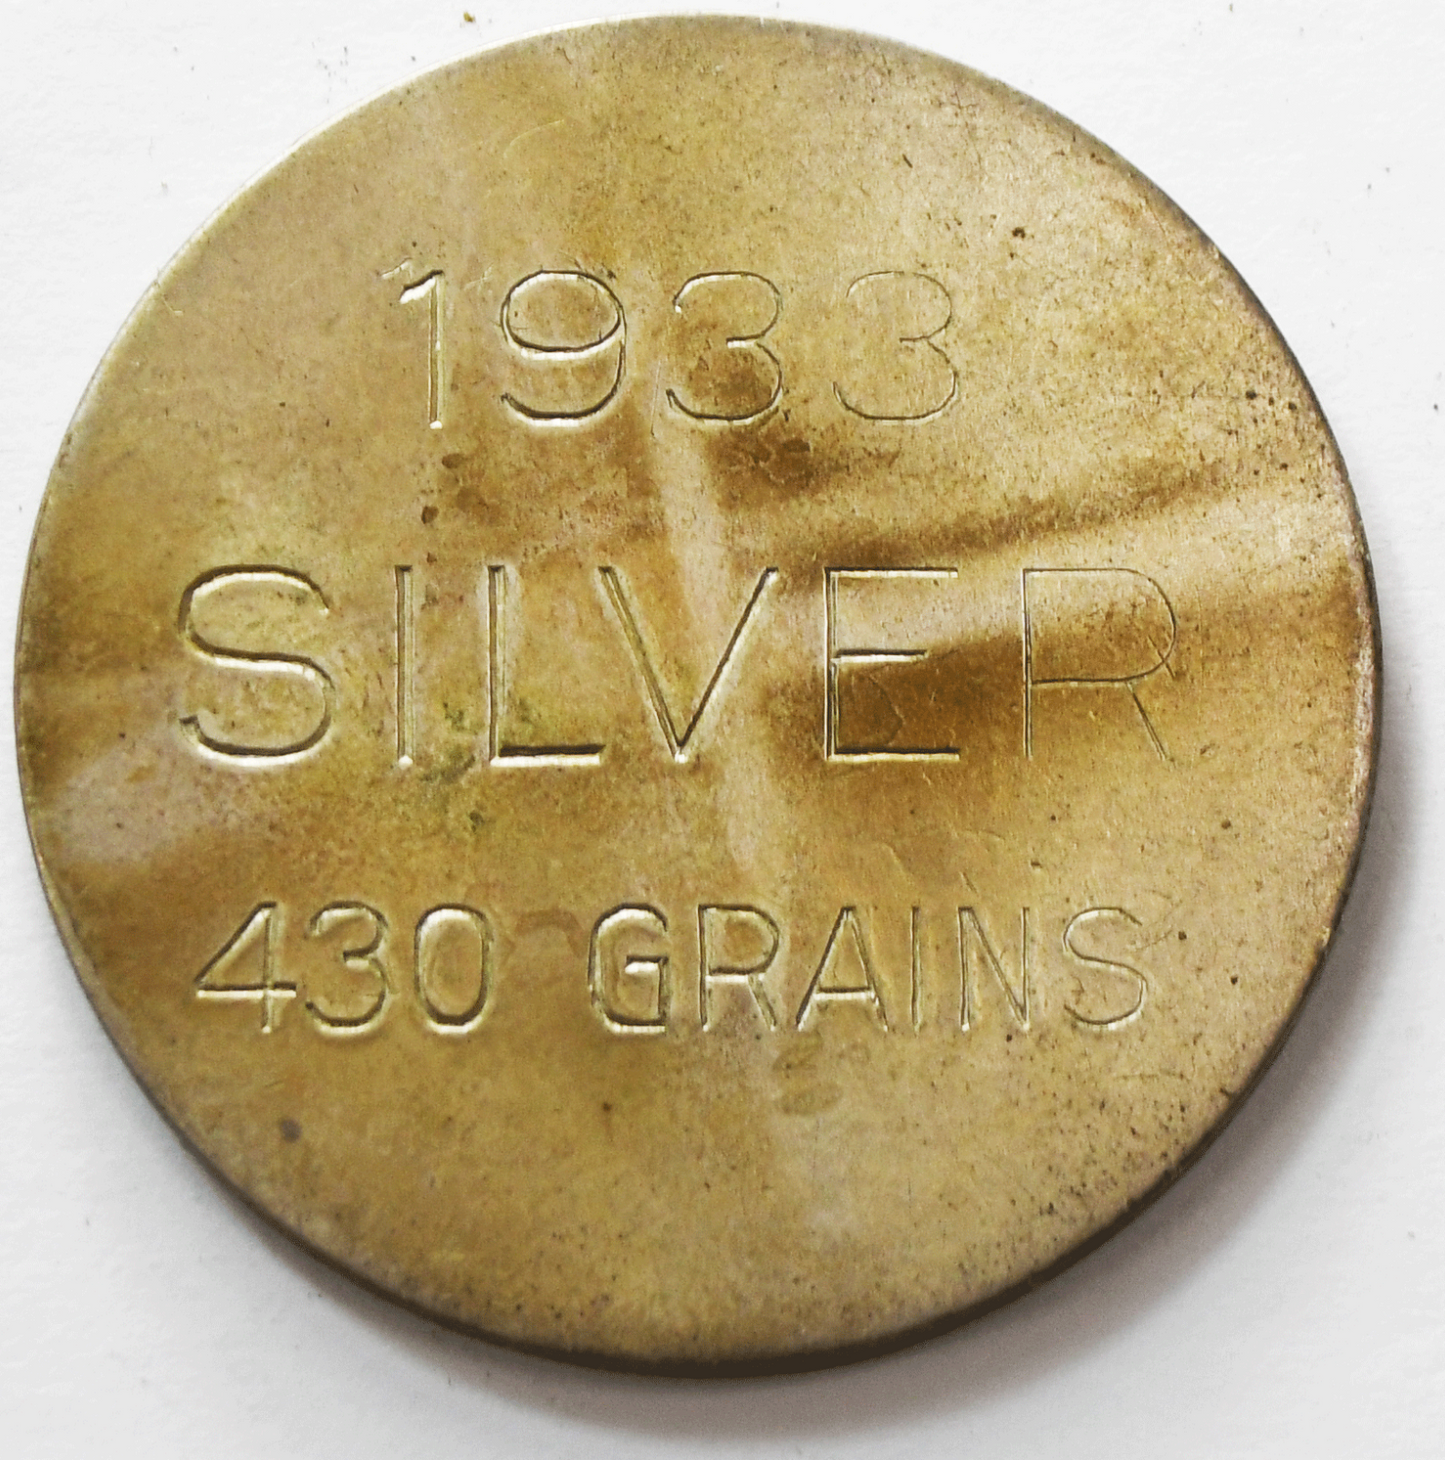 1933 Pedley-Ryan Co Denver HK-825 So Called Dollar 430 Grains Silver 500 Minted